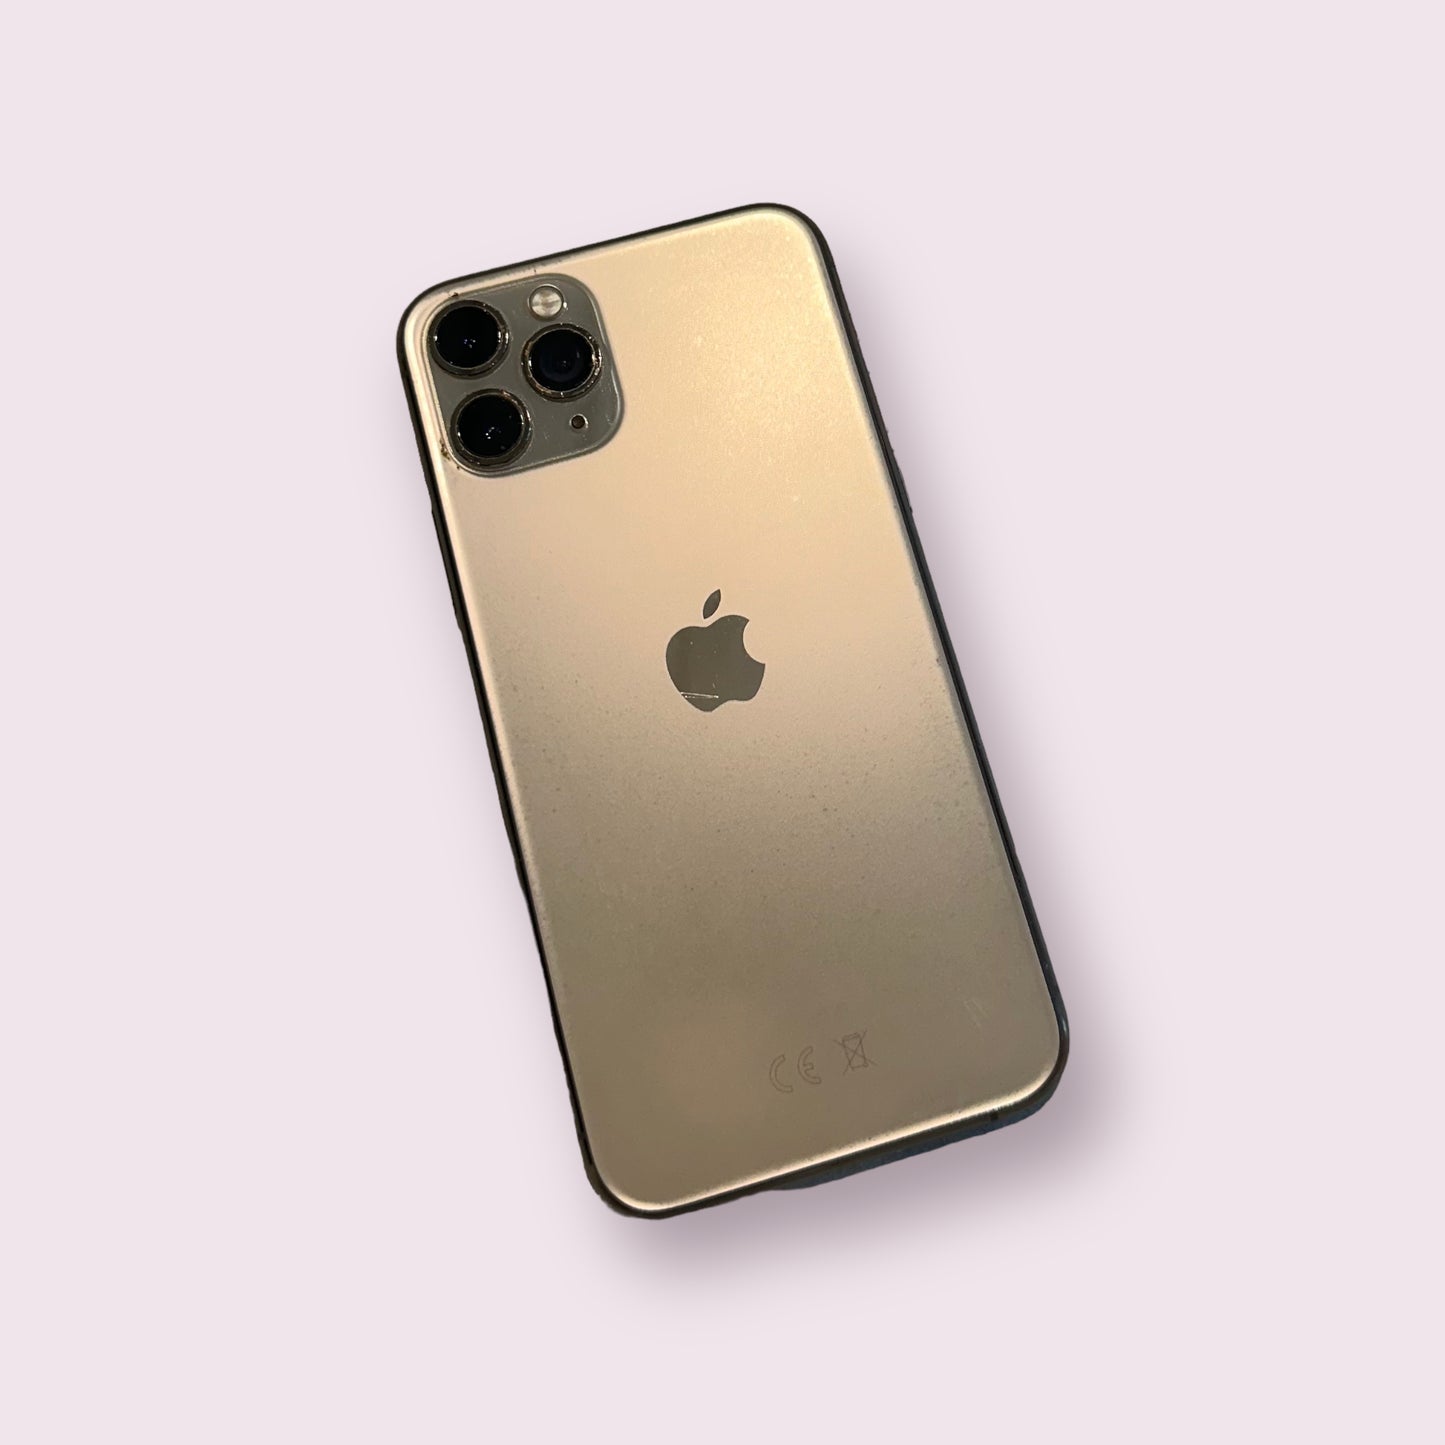 Apple iPhone 11 Pro 64GB Gold - Unlocked - Grade B - AM Display